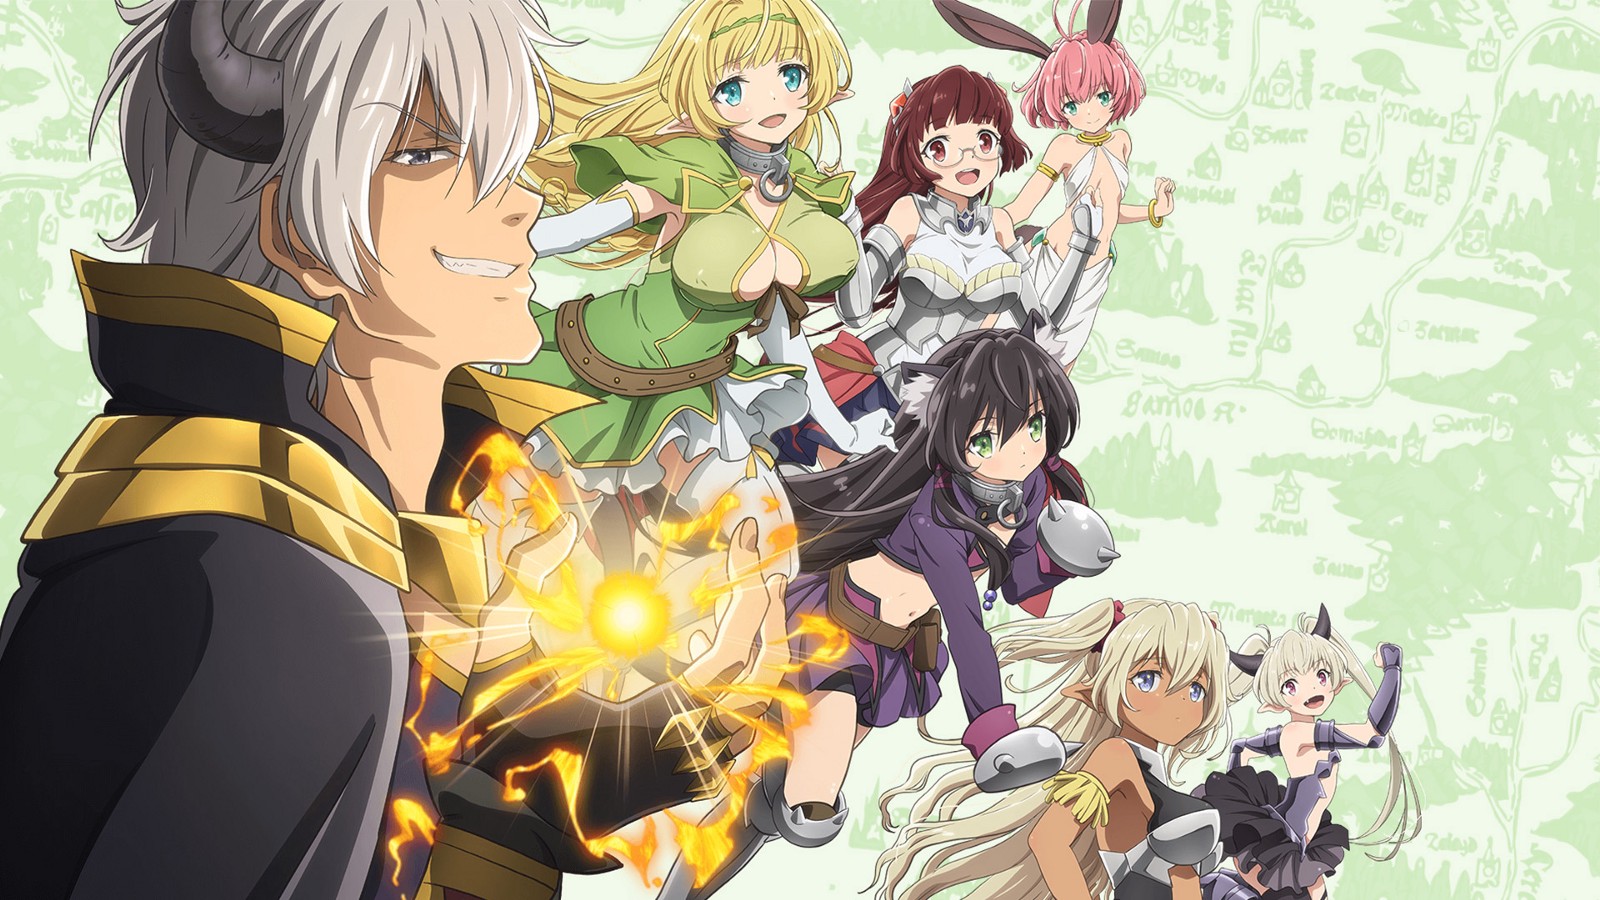 Animes Vision - O novo filme do Konosuba já está